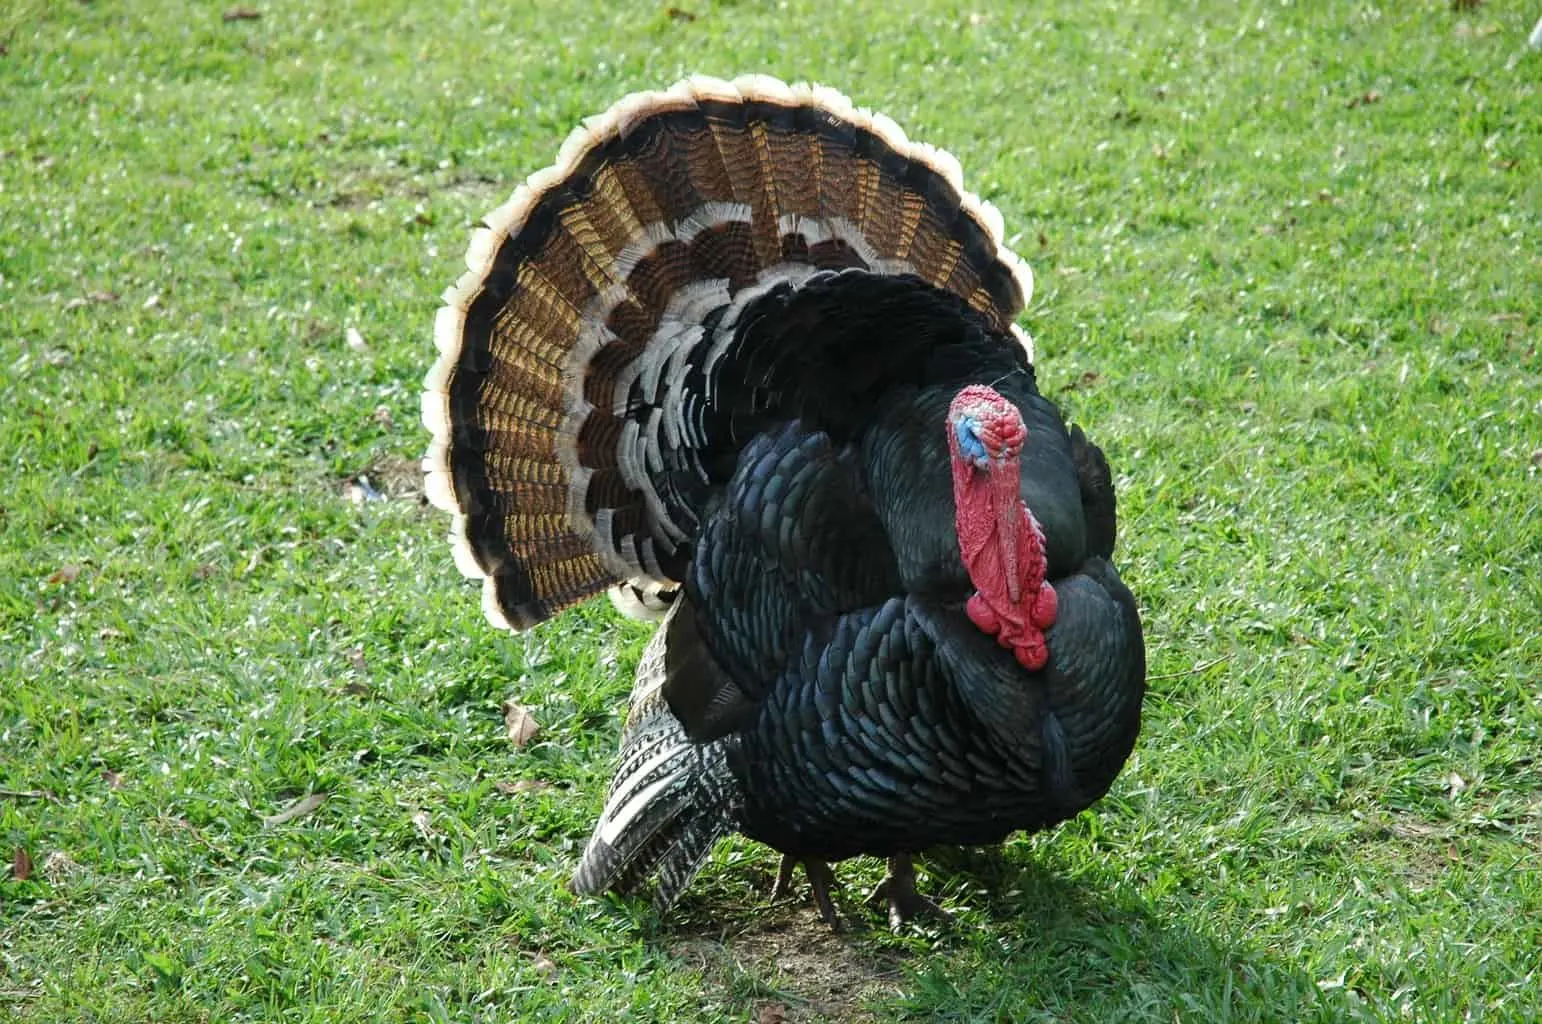 This turkey tom is strutting